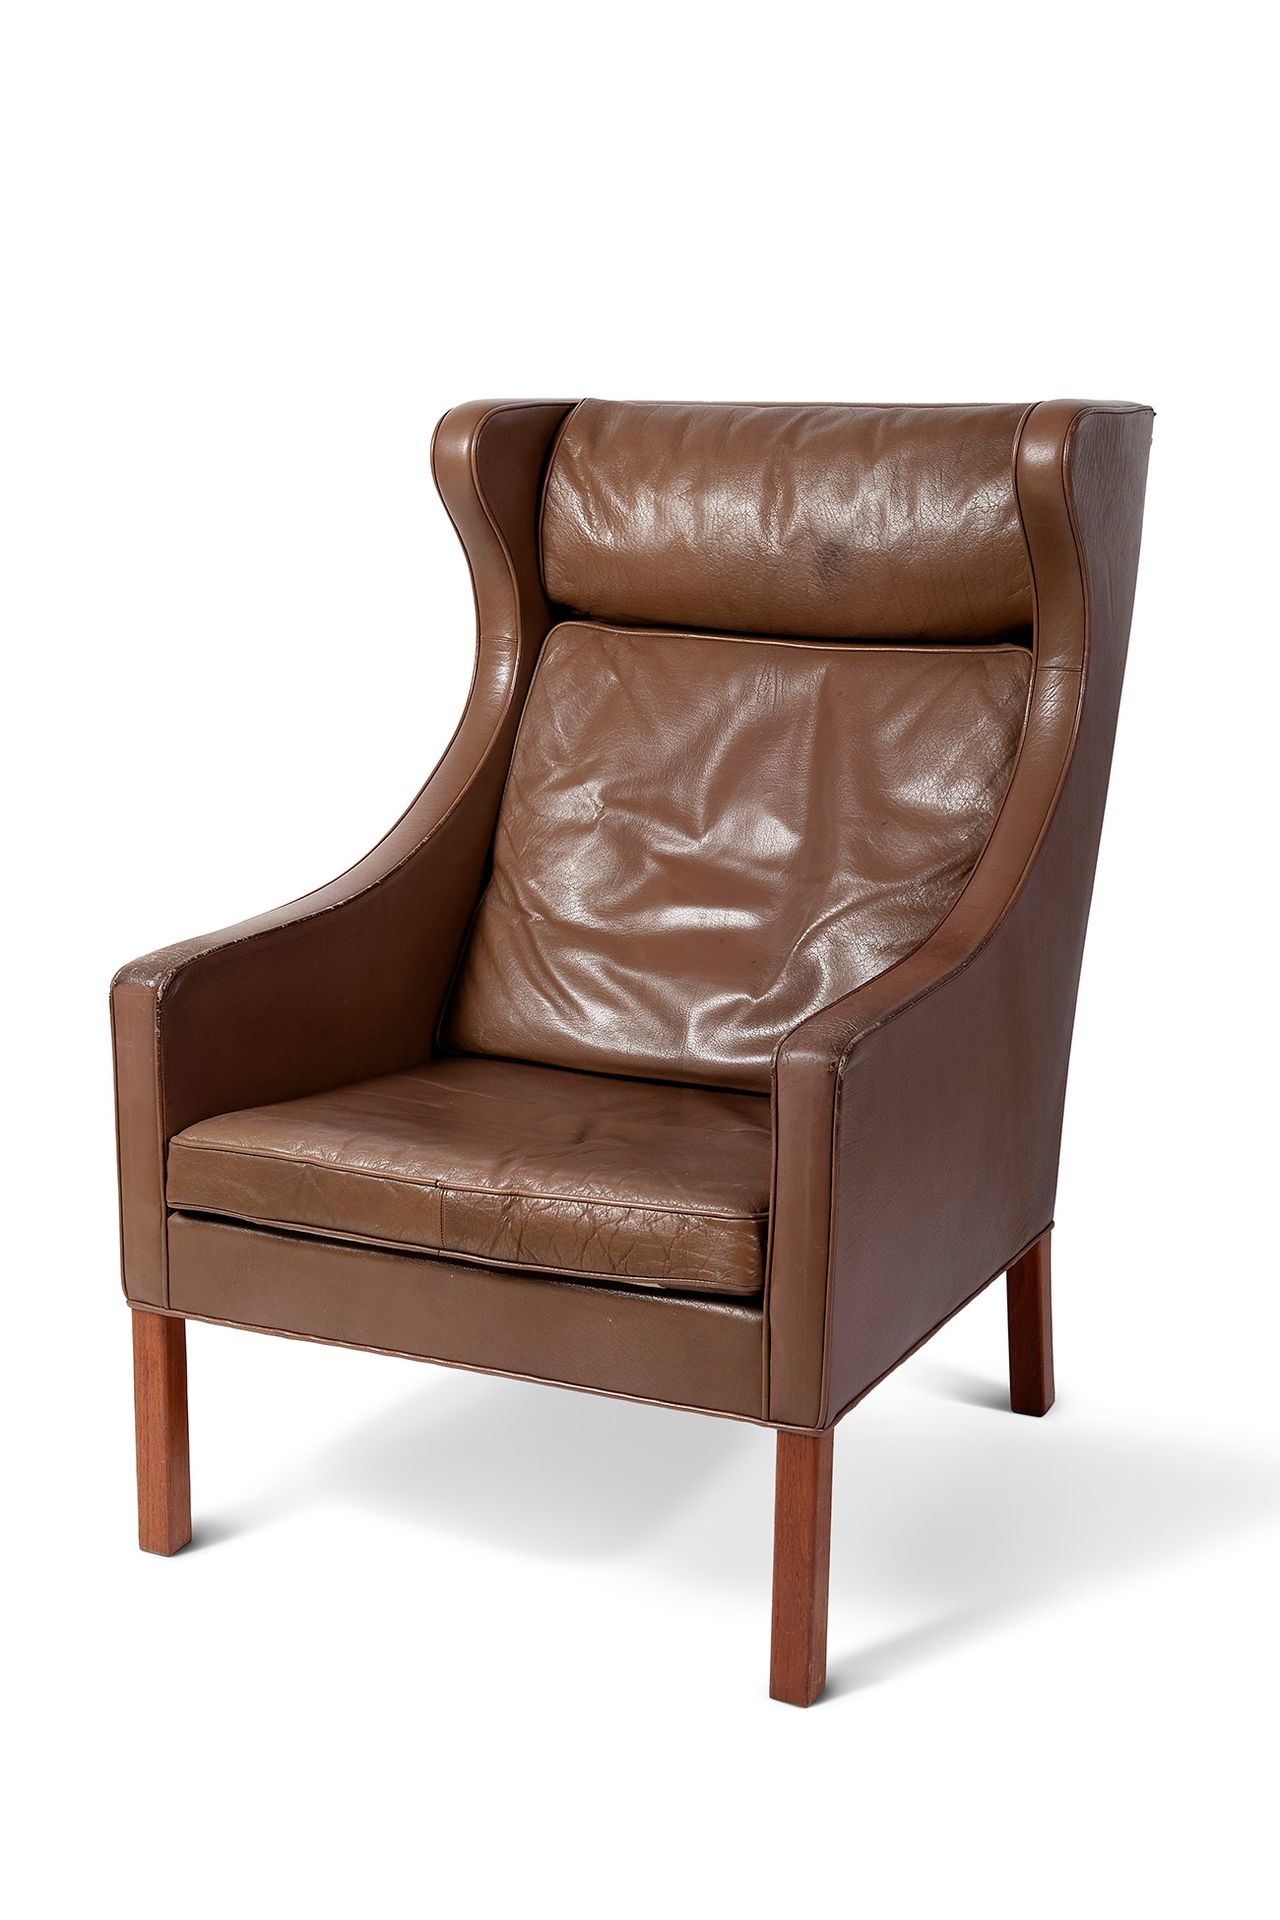 Danish design armchair, 60s-70s. Dänischer Design-Sessel, 60-70er Jahre.
Holz un&hellip;